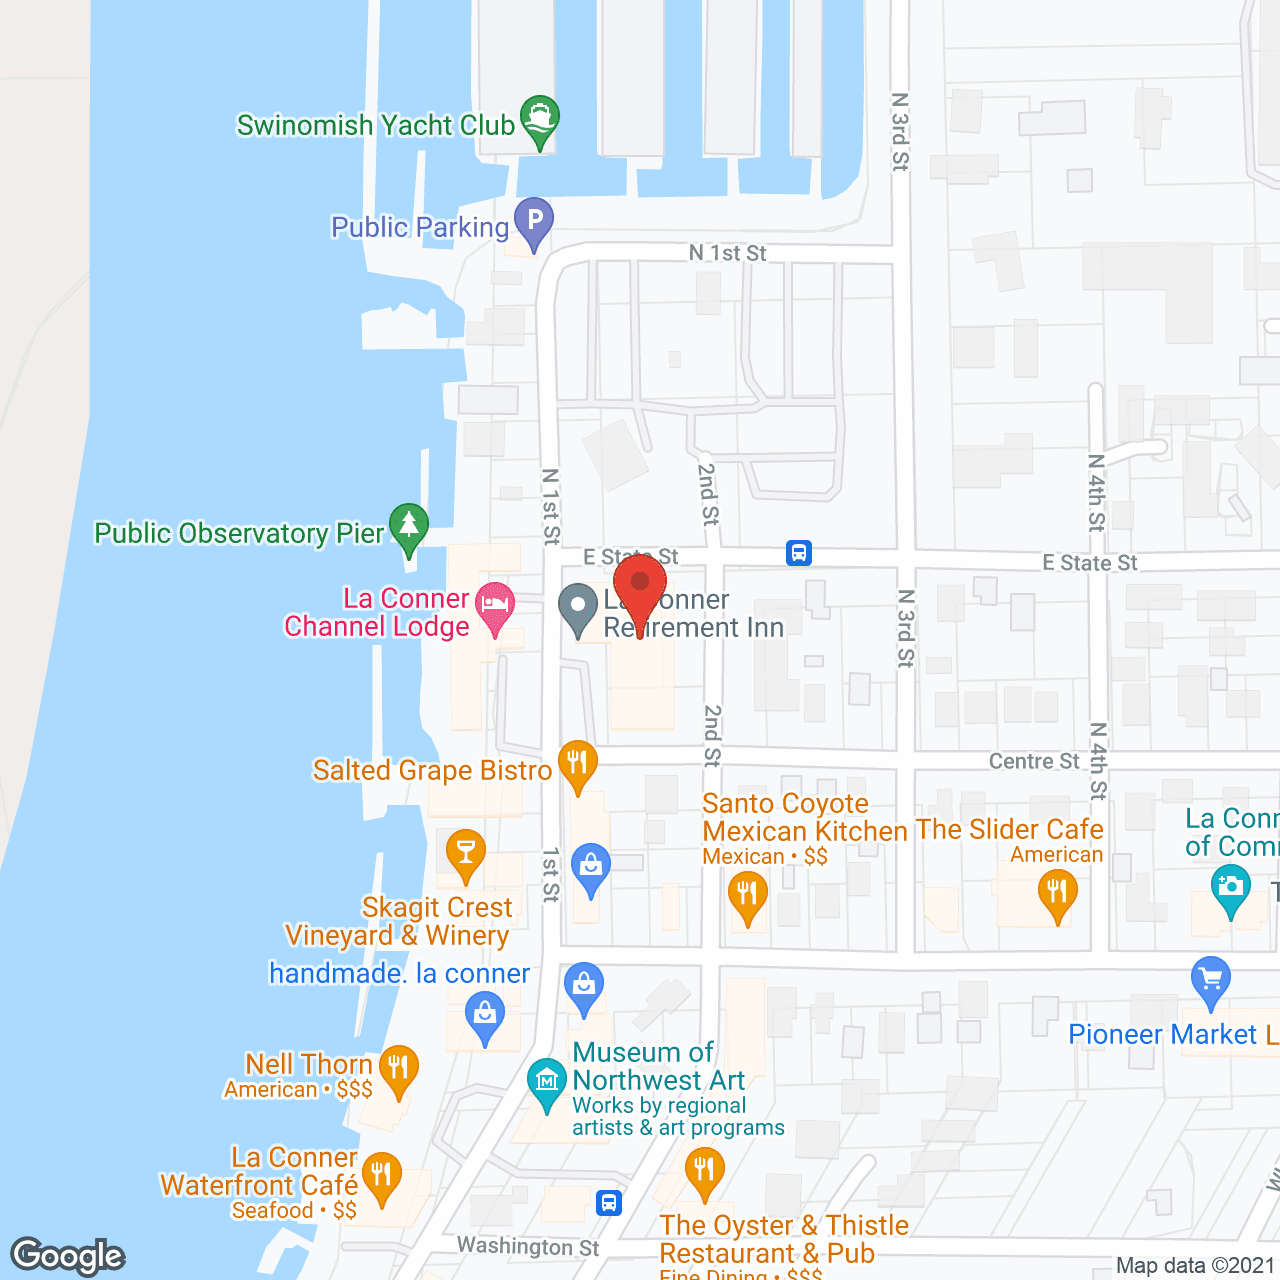 La Conner Retirement Inn in google map